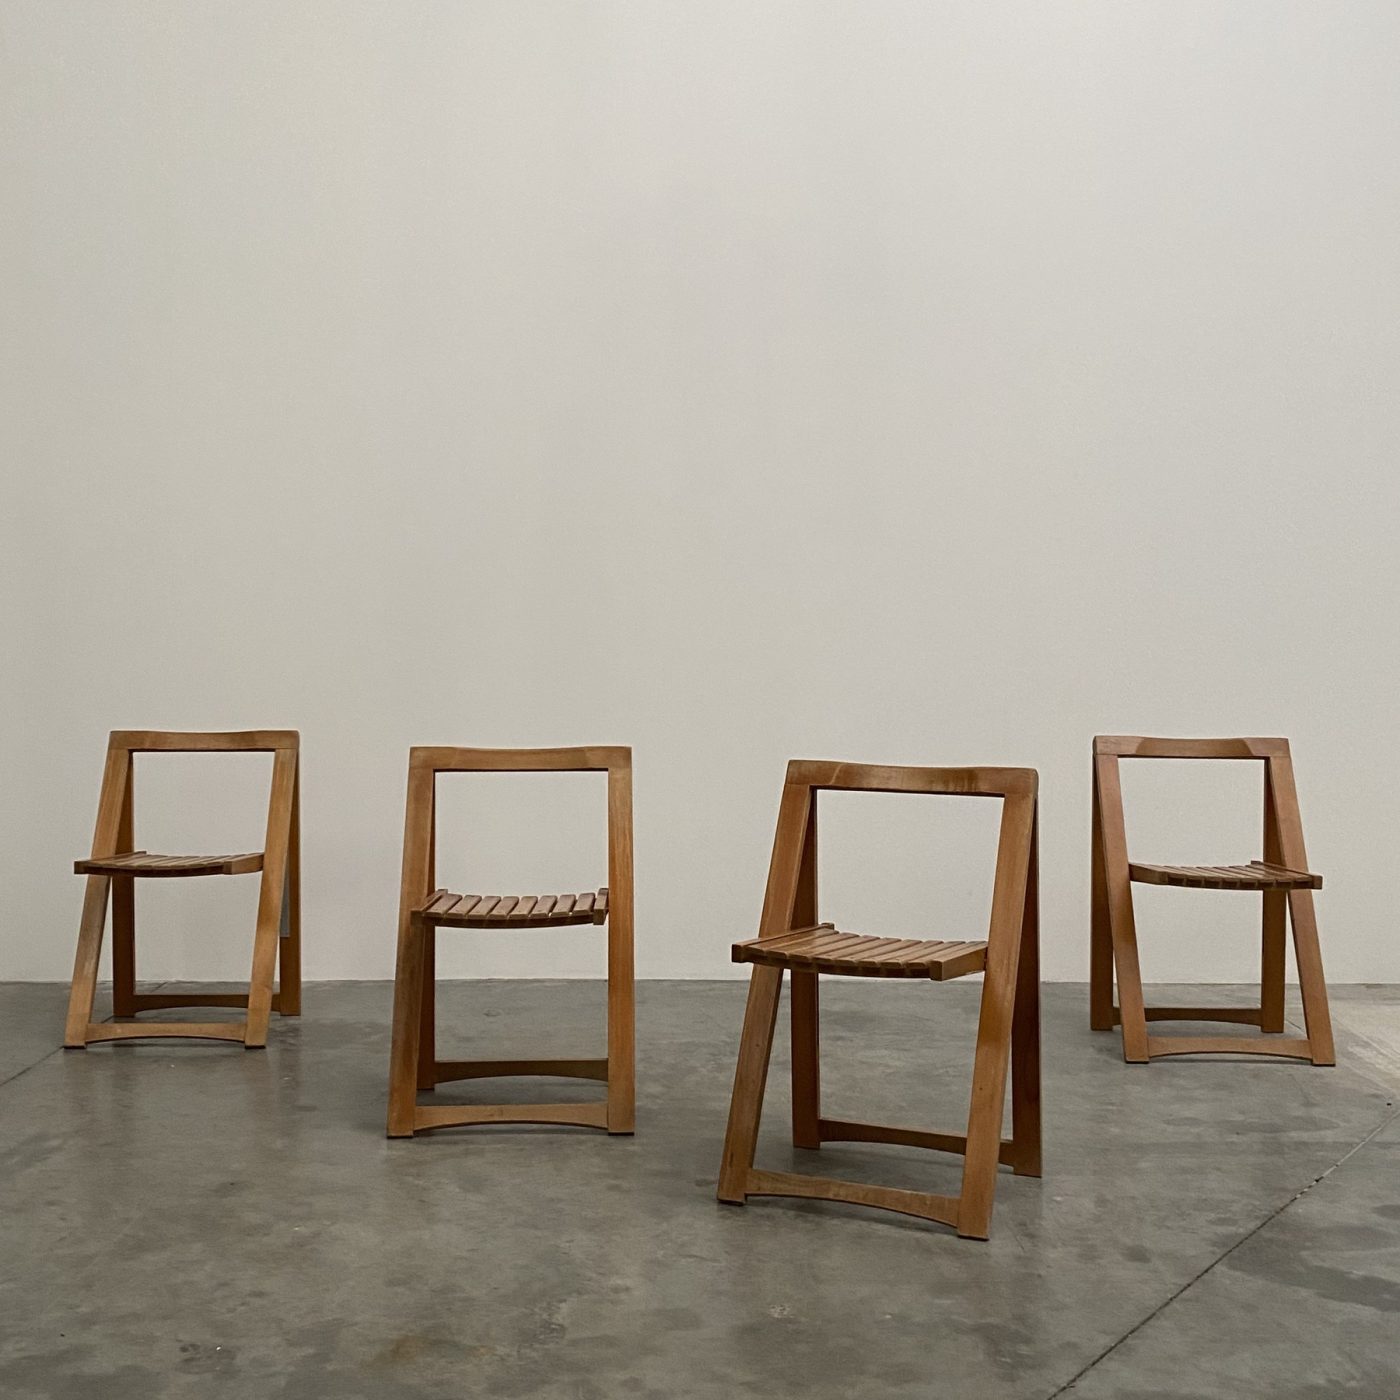 objet-vagabond-folding-chairs0002